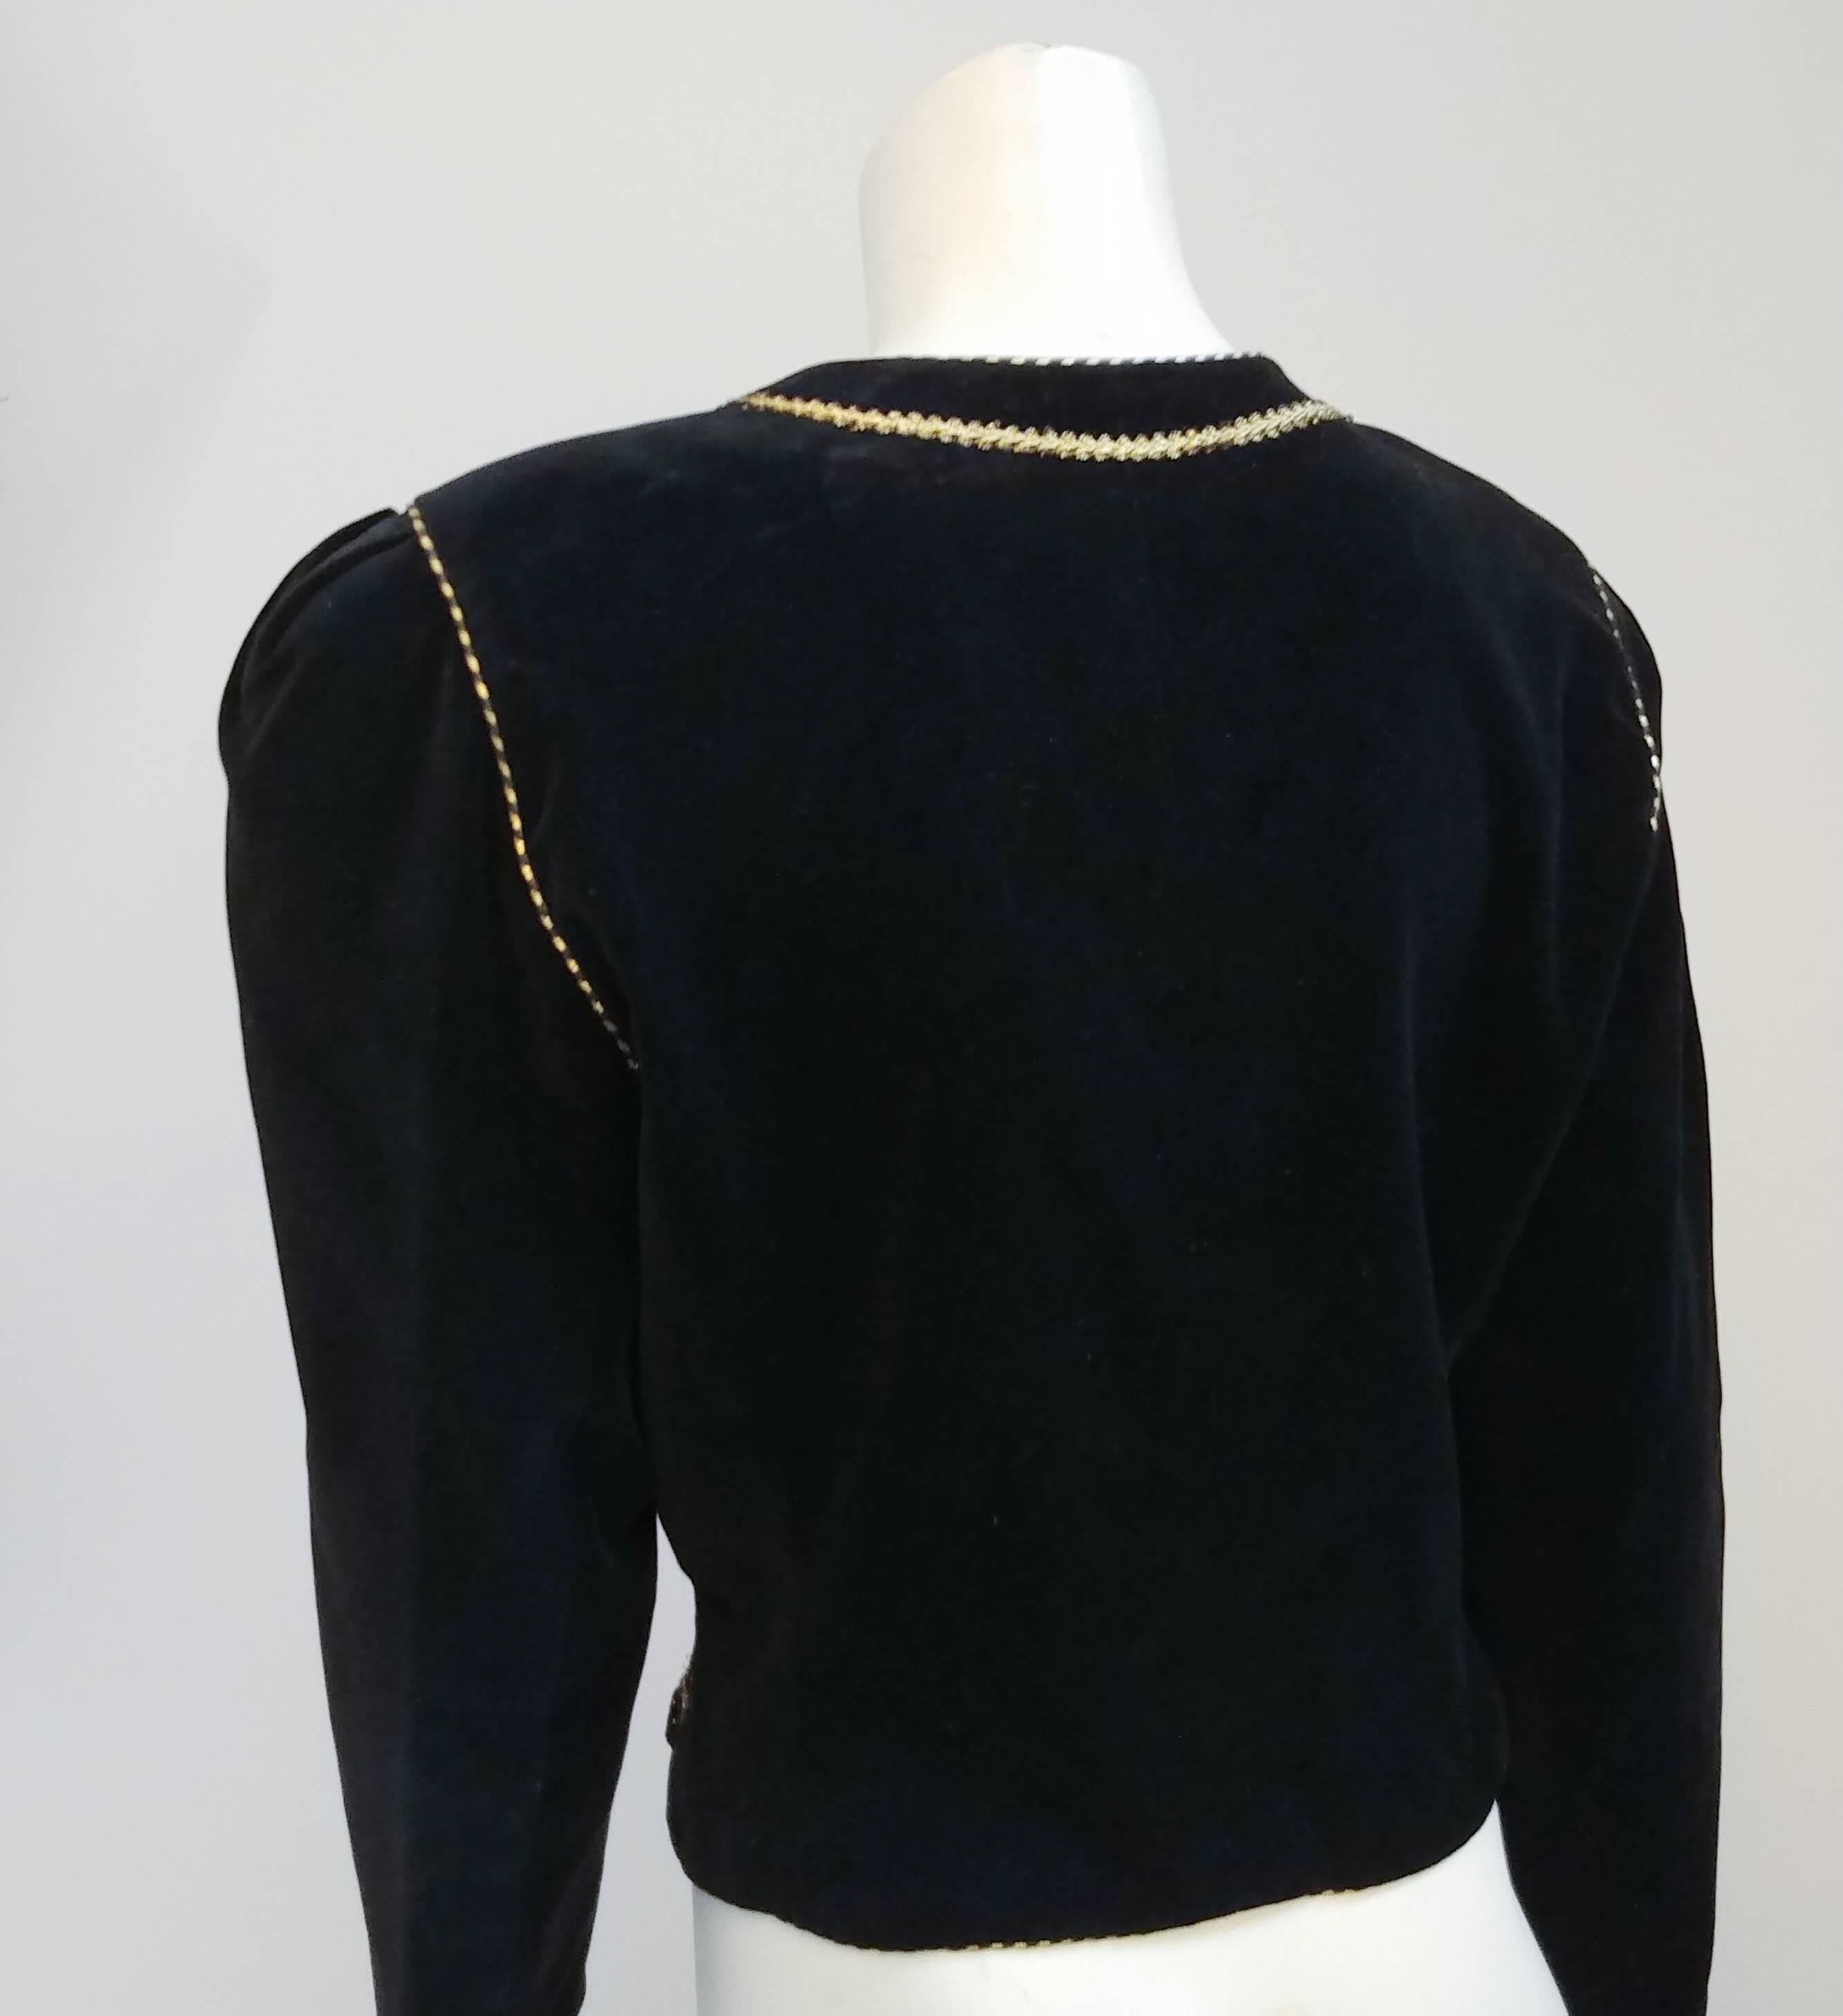 1980s David Butler Black Velveteen Top w/ Gold Trim. Black Velveteen Top with gathered shoulders, gold-tone trim, and button front closure.